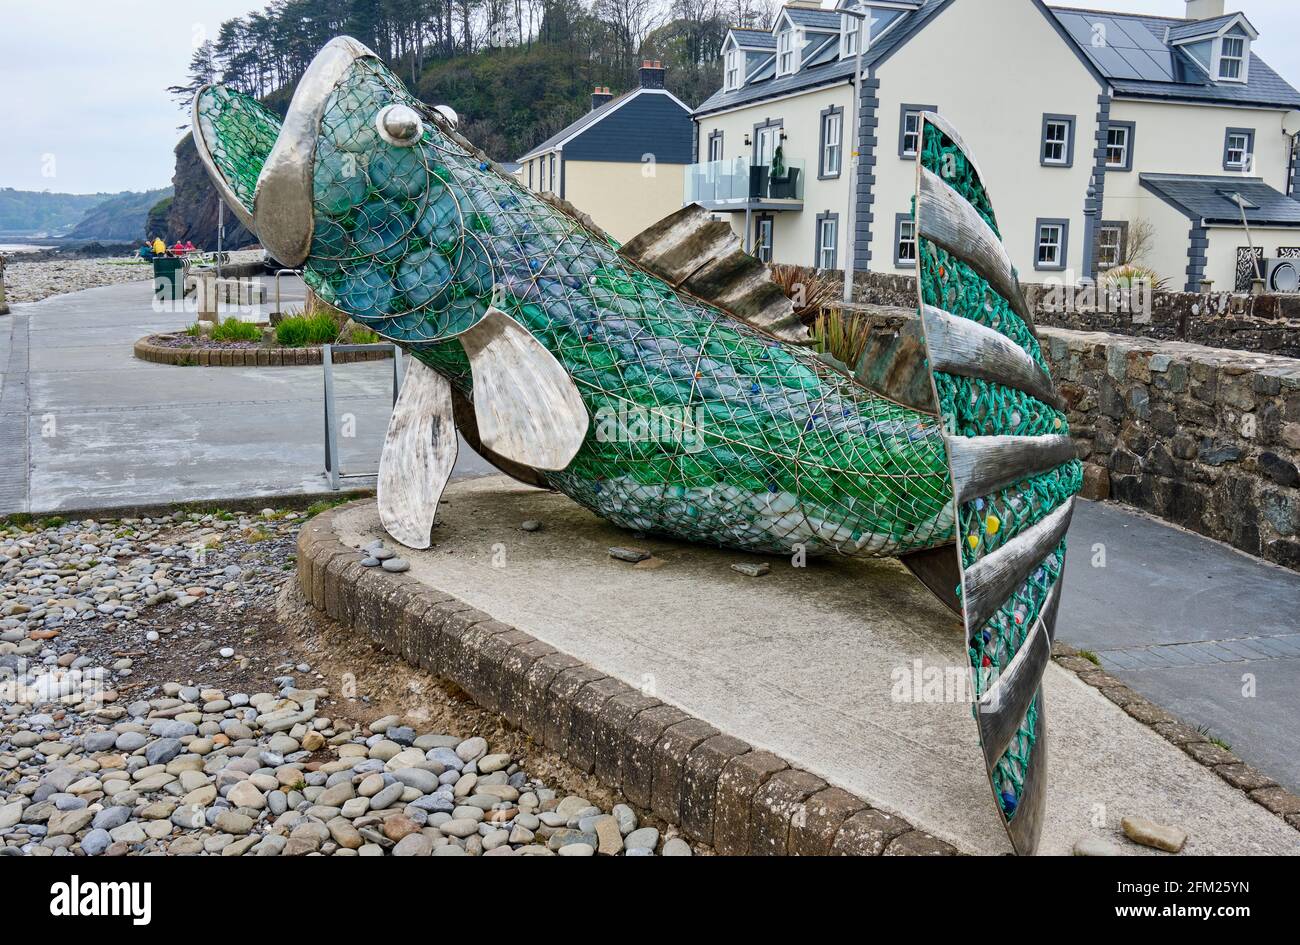 Plastic fish sculpture at Amroth, Pembrokeshire, Wales Stock Photo